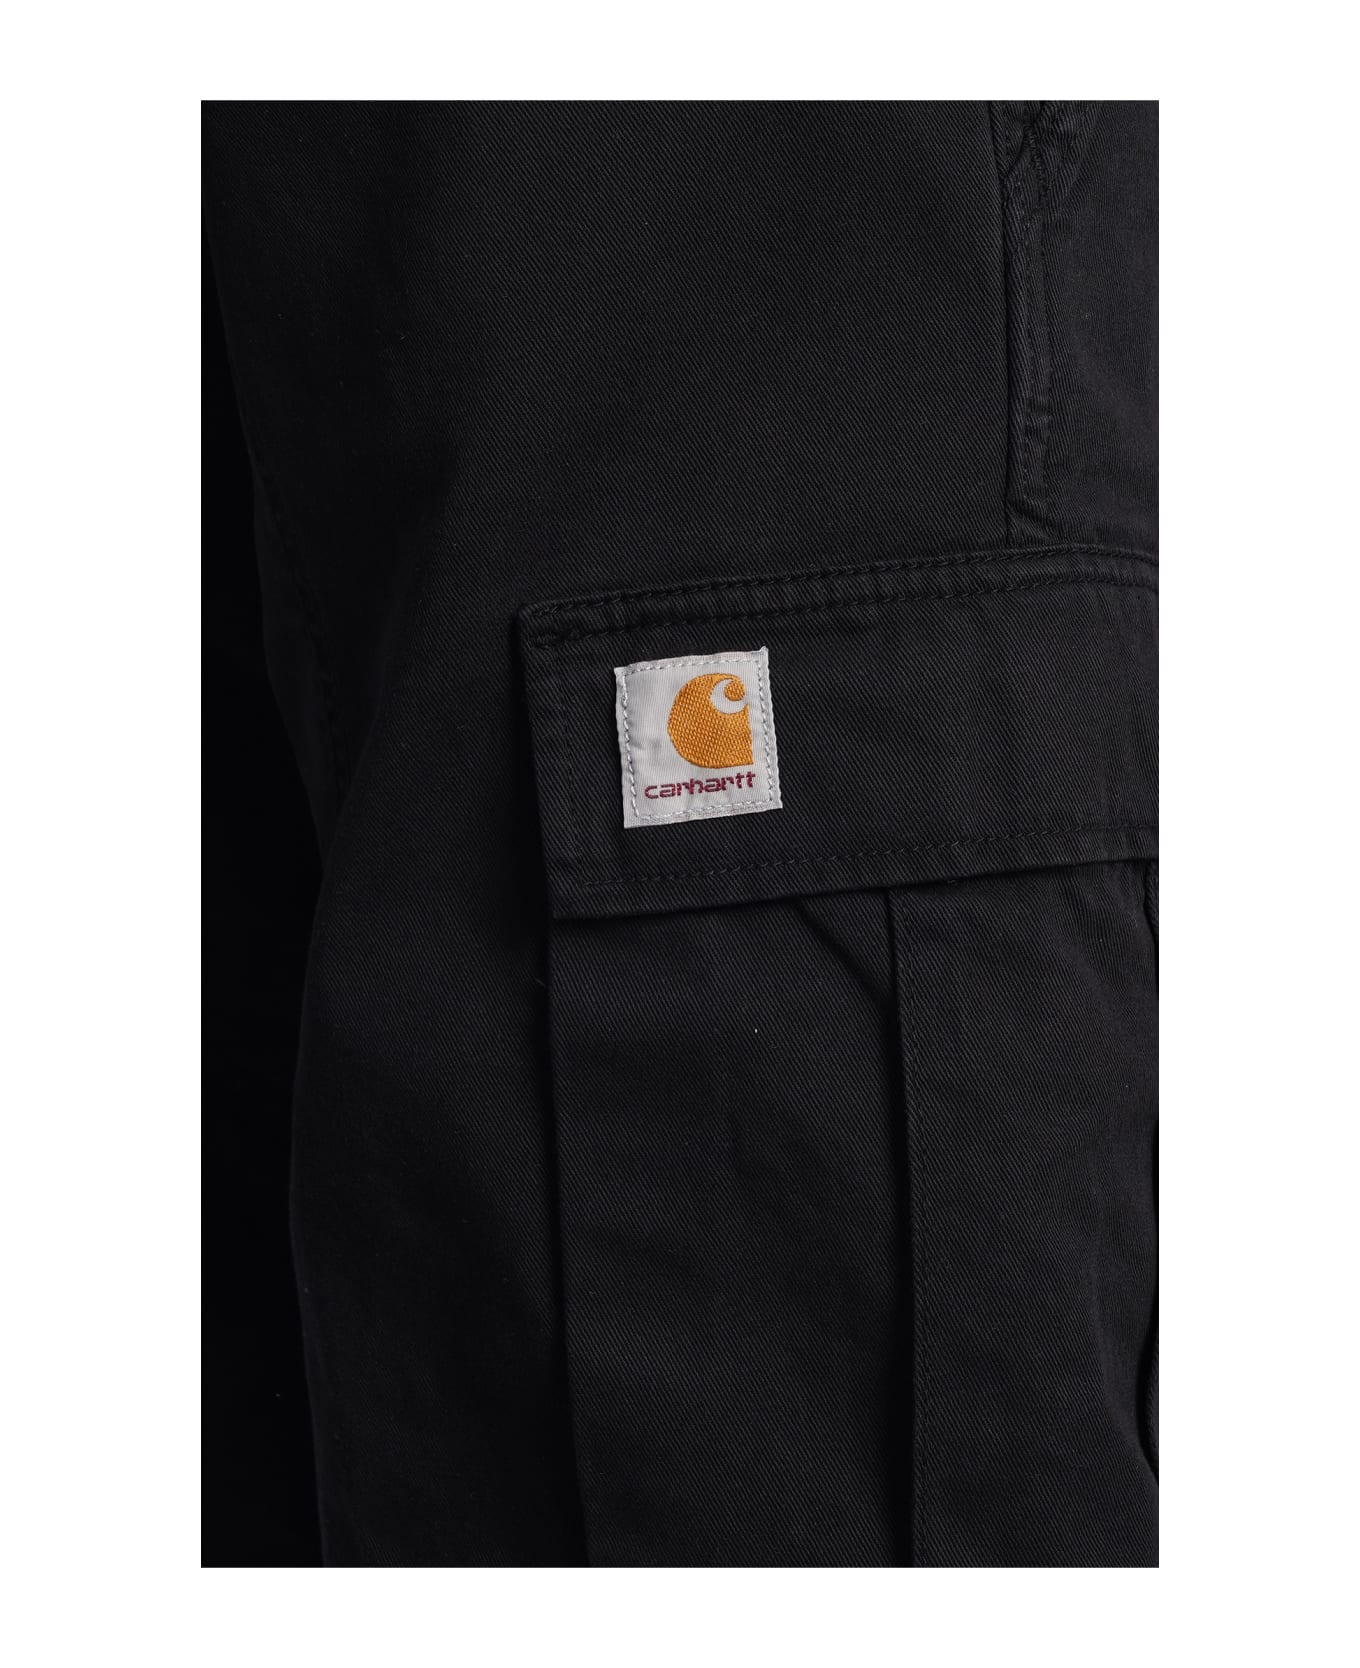 Carhartt Shorts In Black Cotton - Black